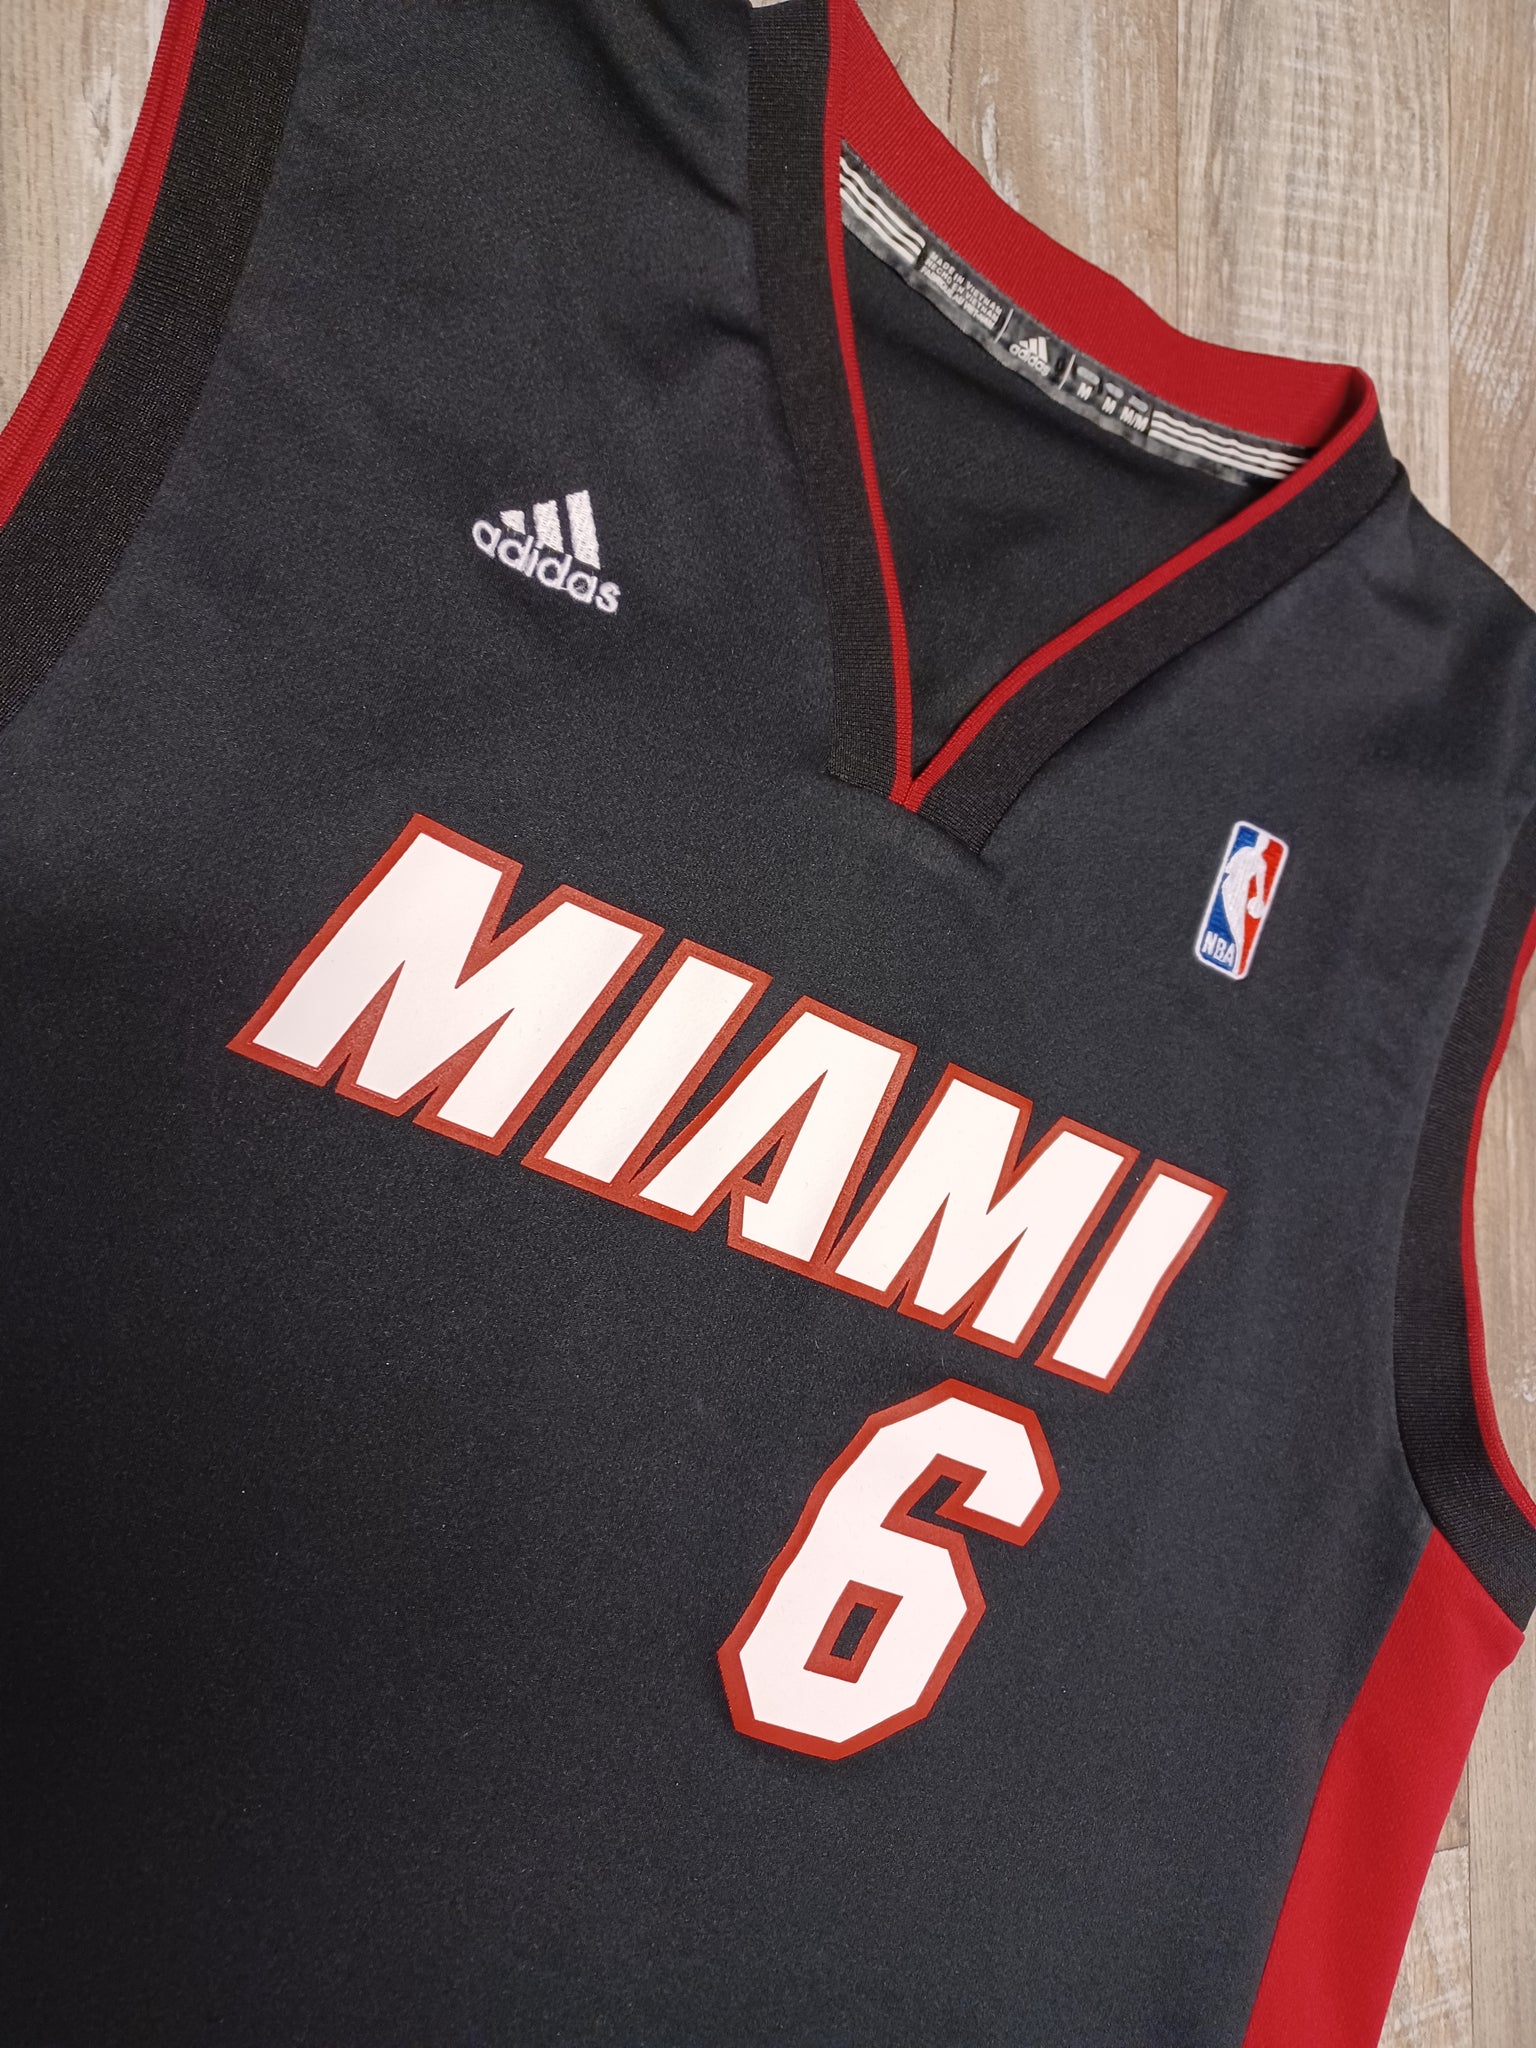 Official Miami Heat Jerseys, Heat Basketball Jerseys